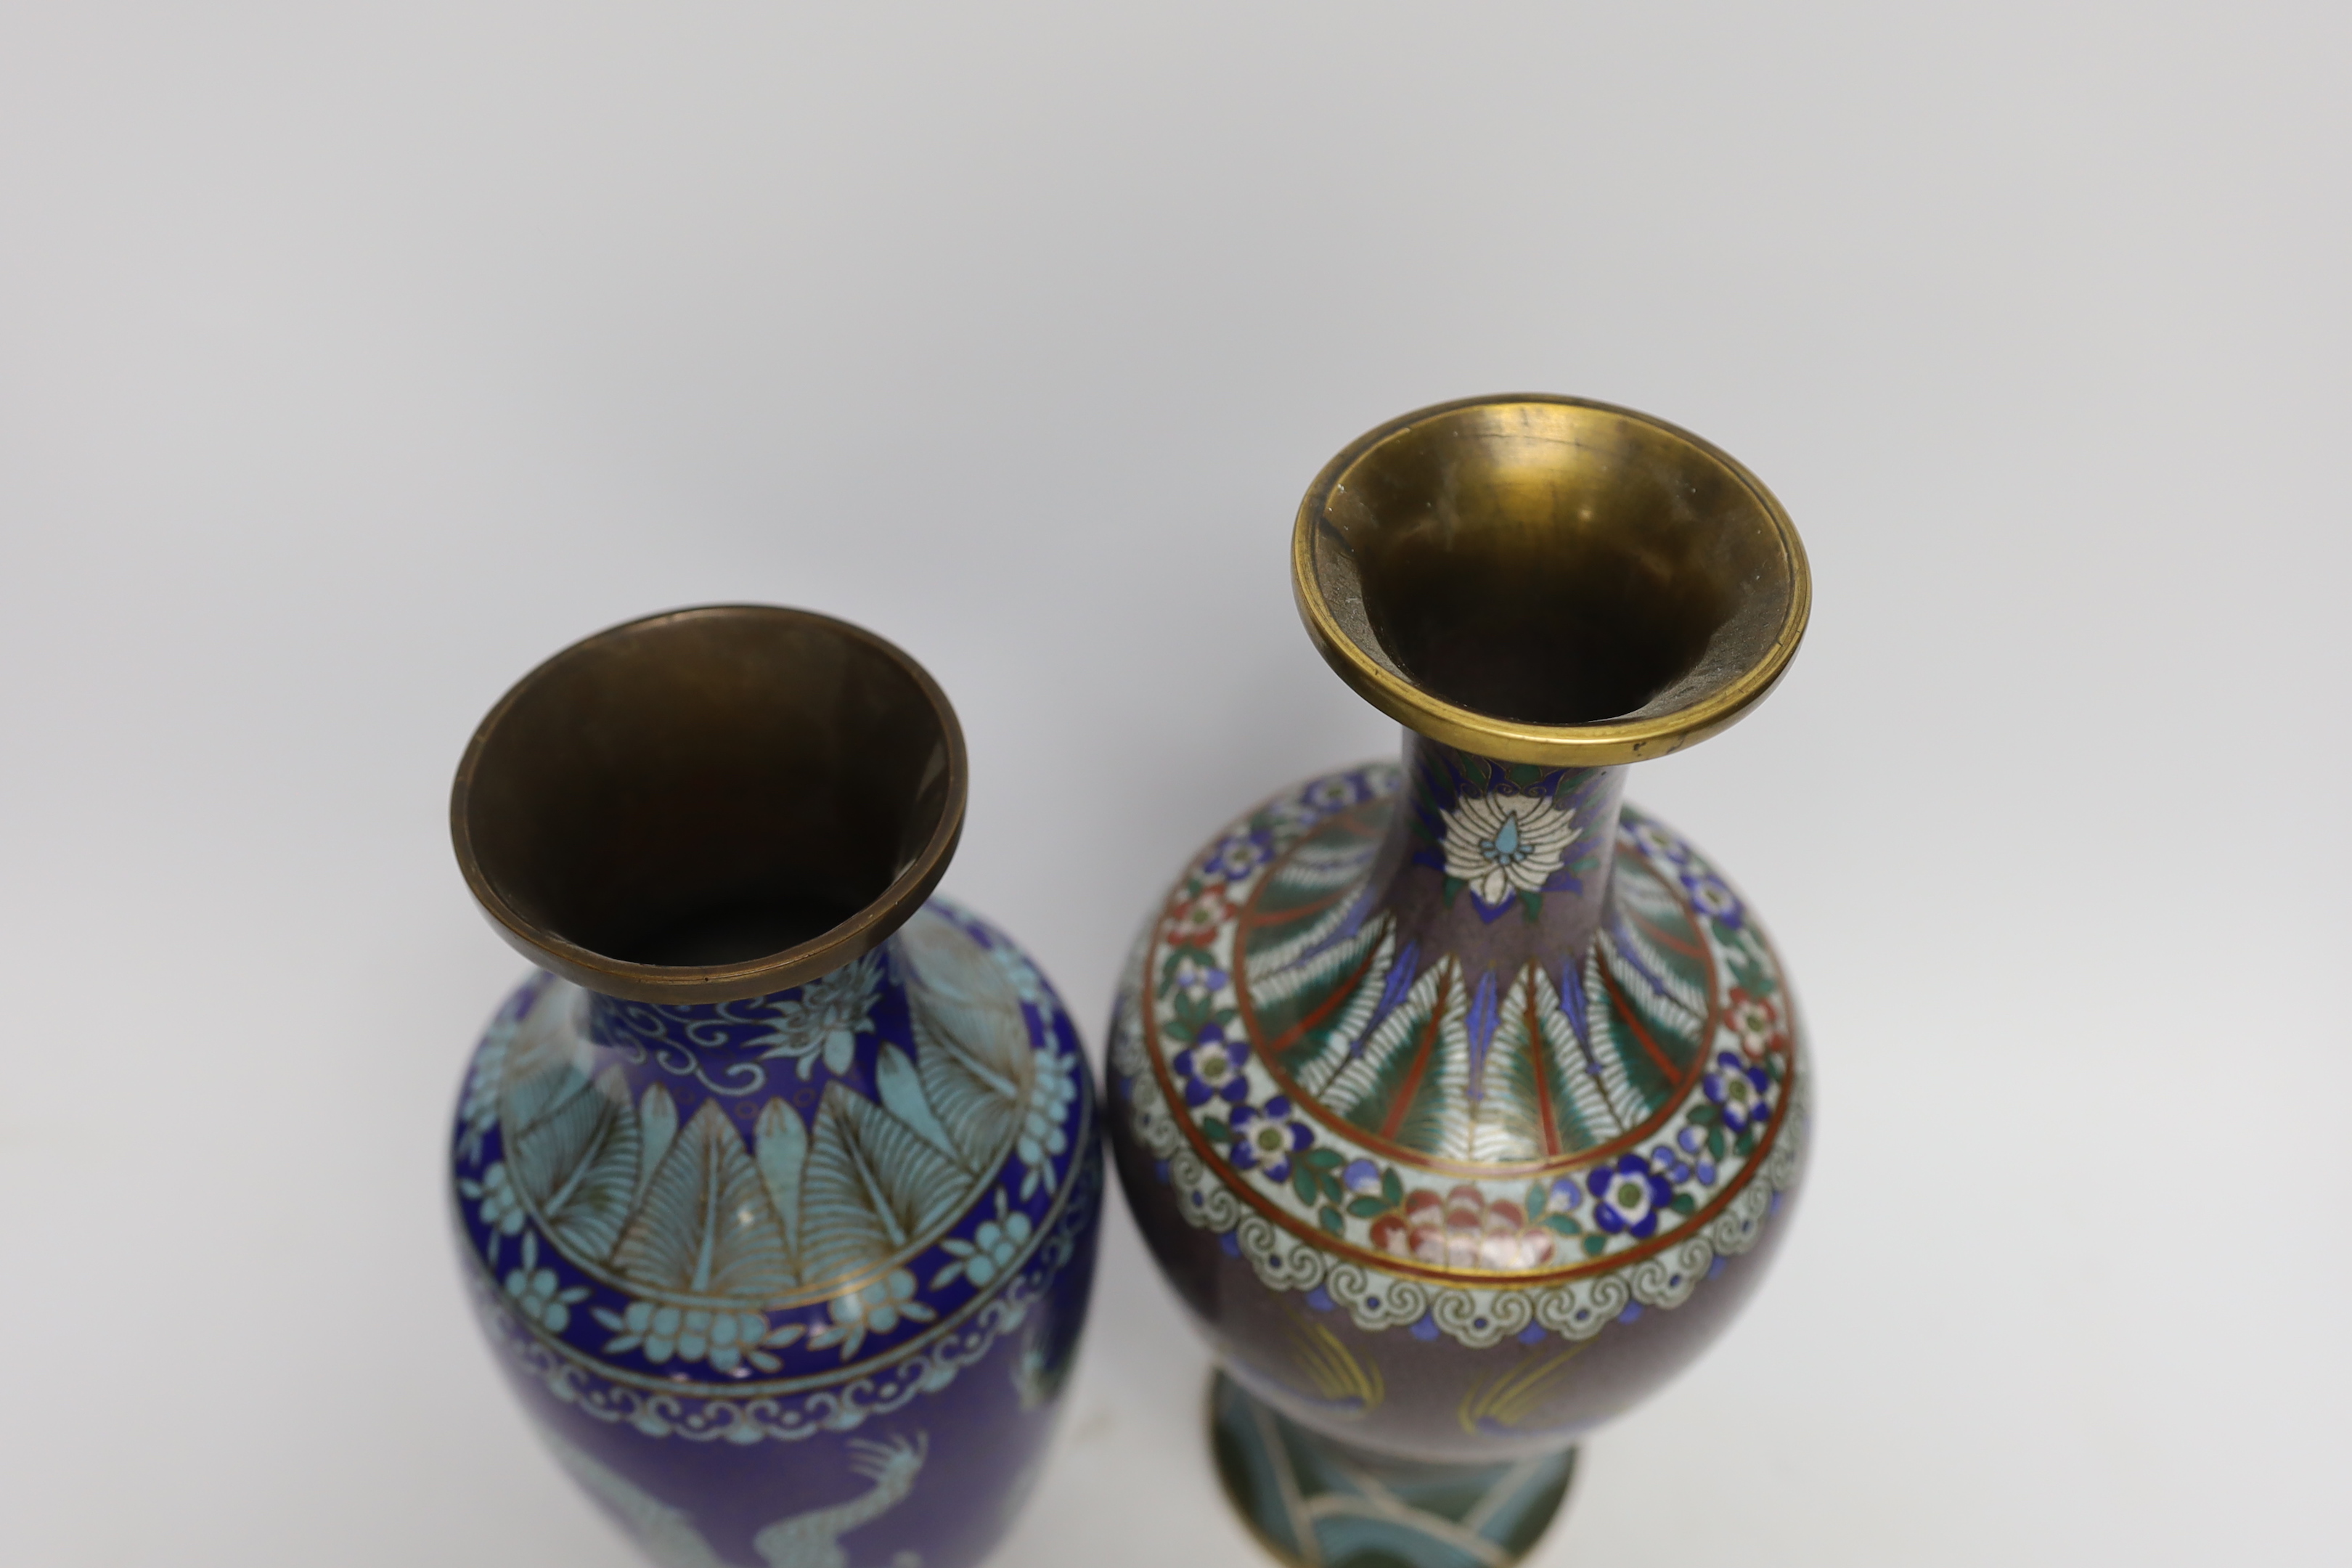 Two Chinese cloisonné enamel ‘dragon’ vases, tallest 27cm